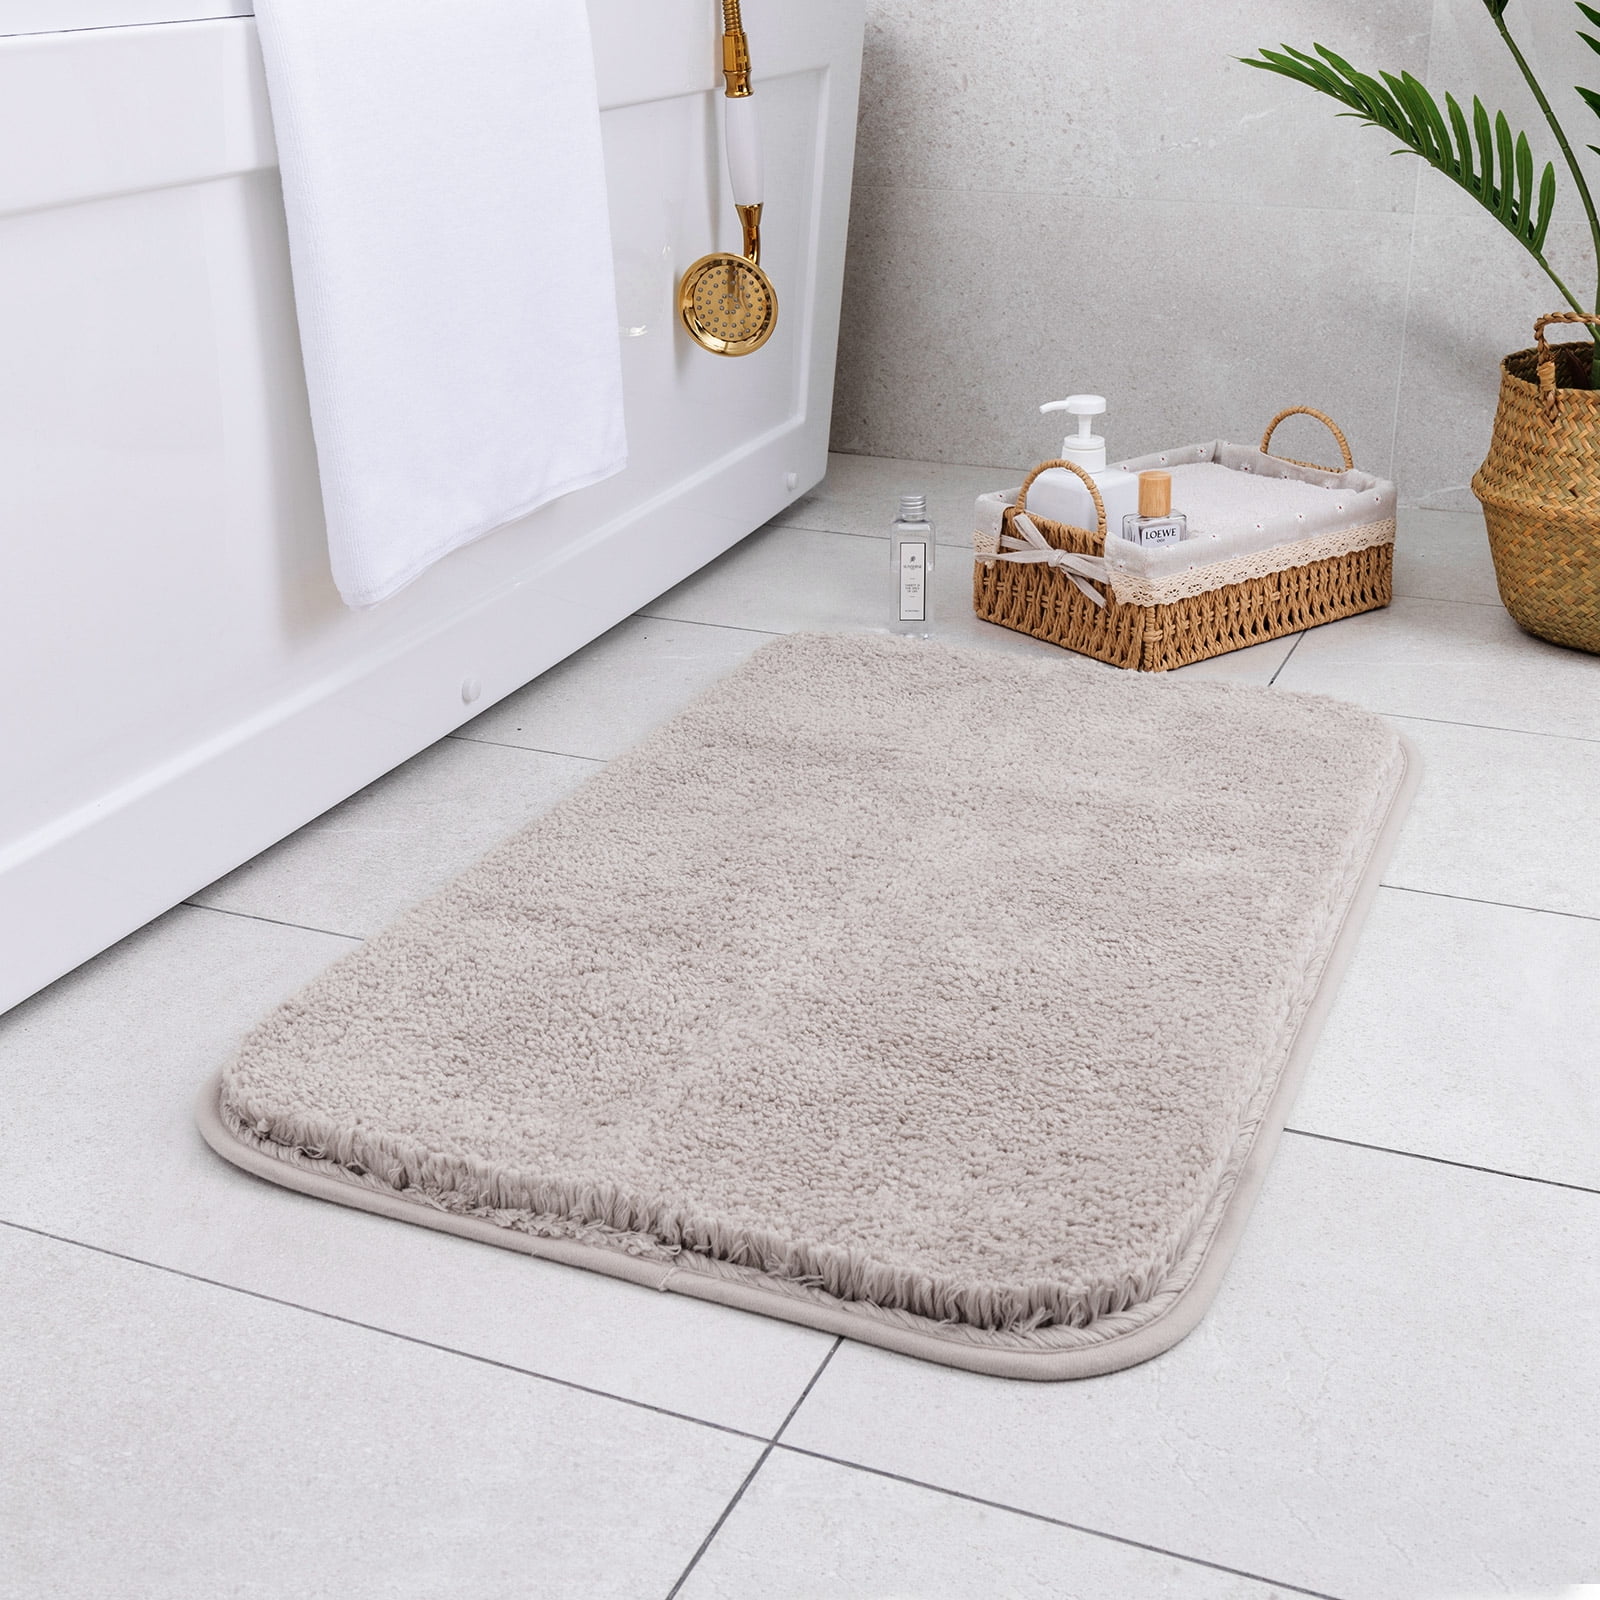 NEW Absorbent Soft Velvet Footprint Bath Bathroom Floor Shower Mat Rug Nonslip 